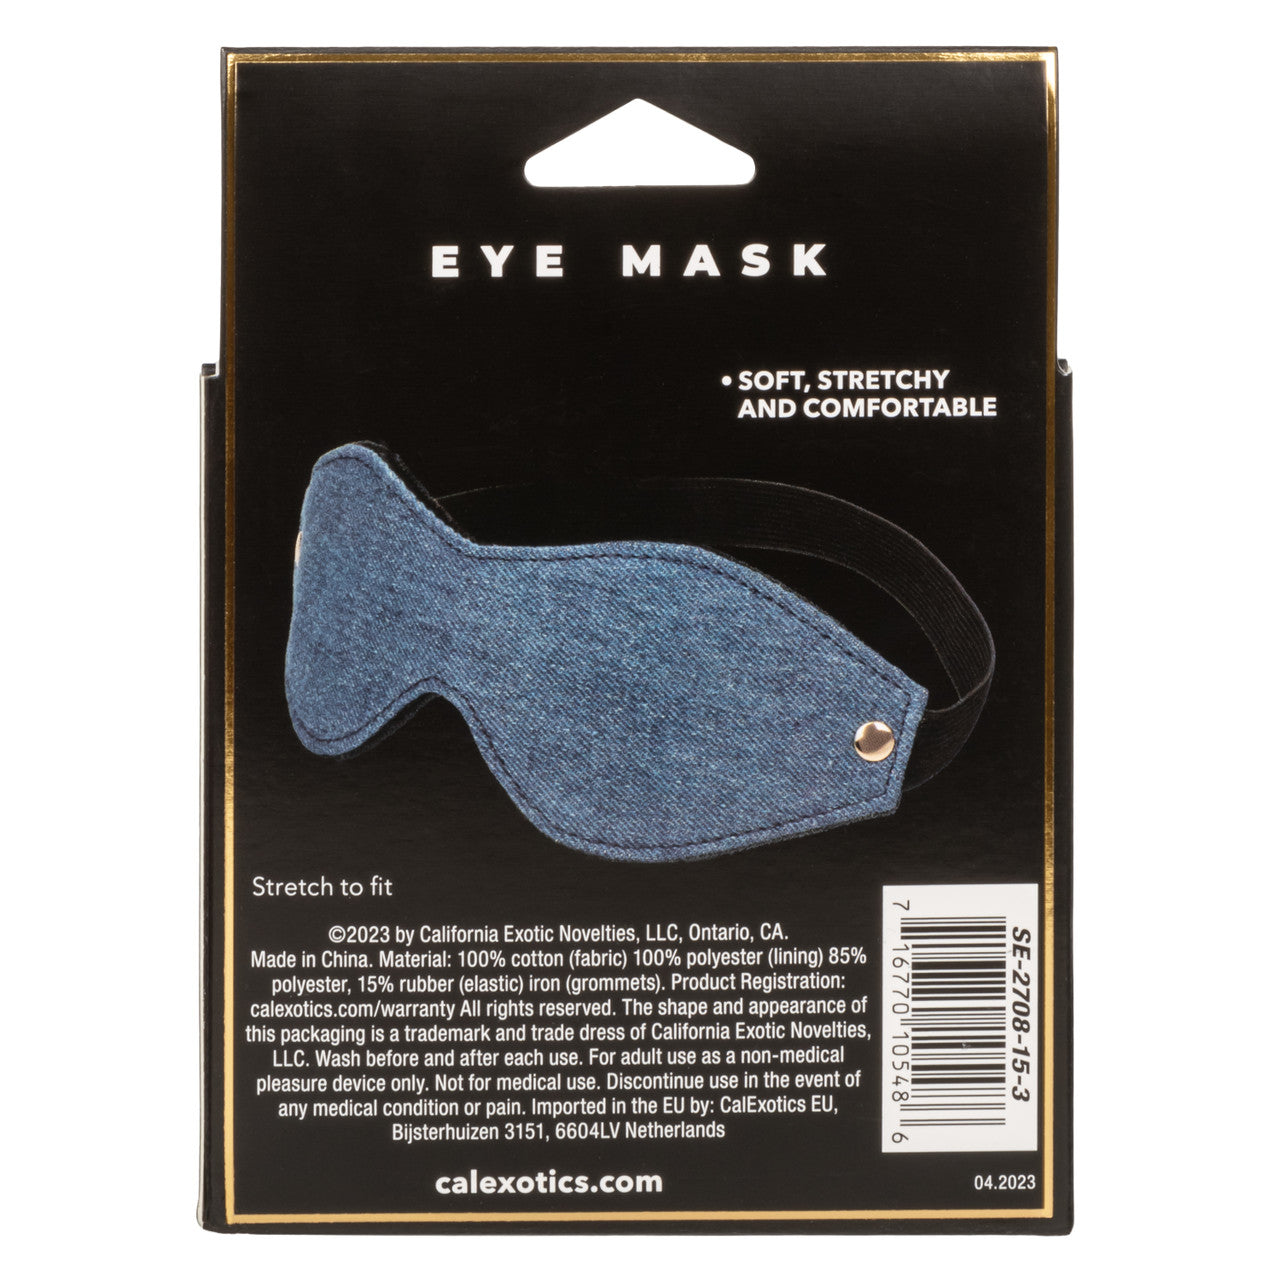 Ride 'Em Premium Denim Collection Eye Mask